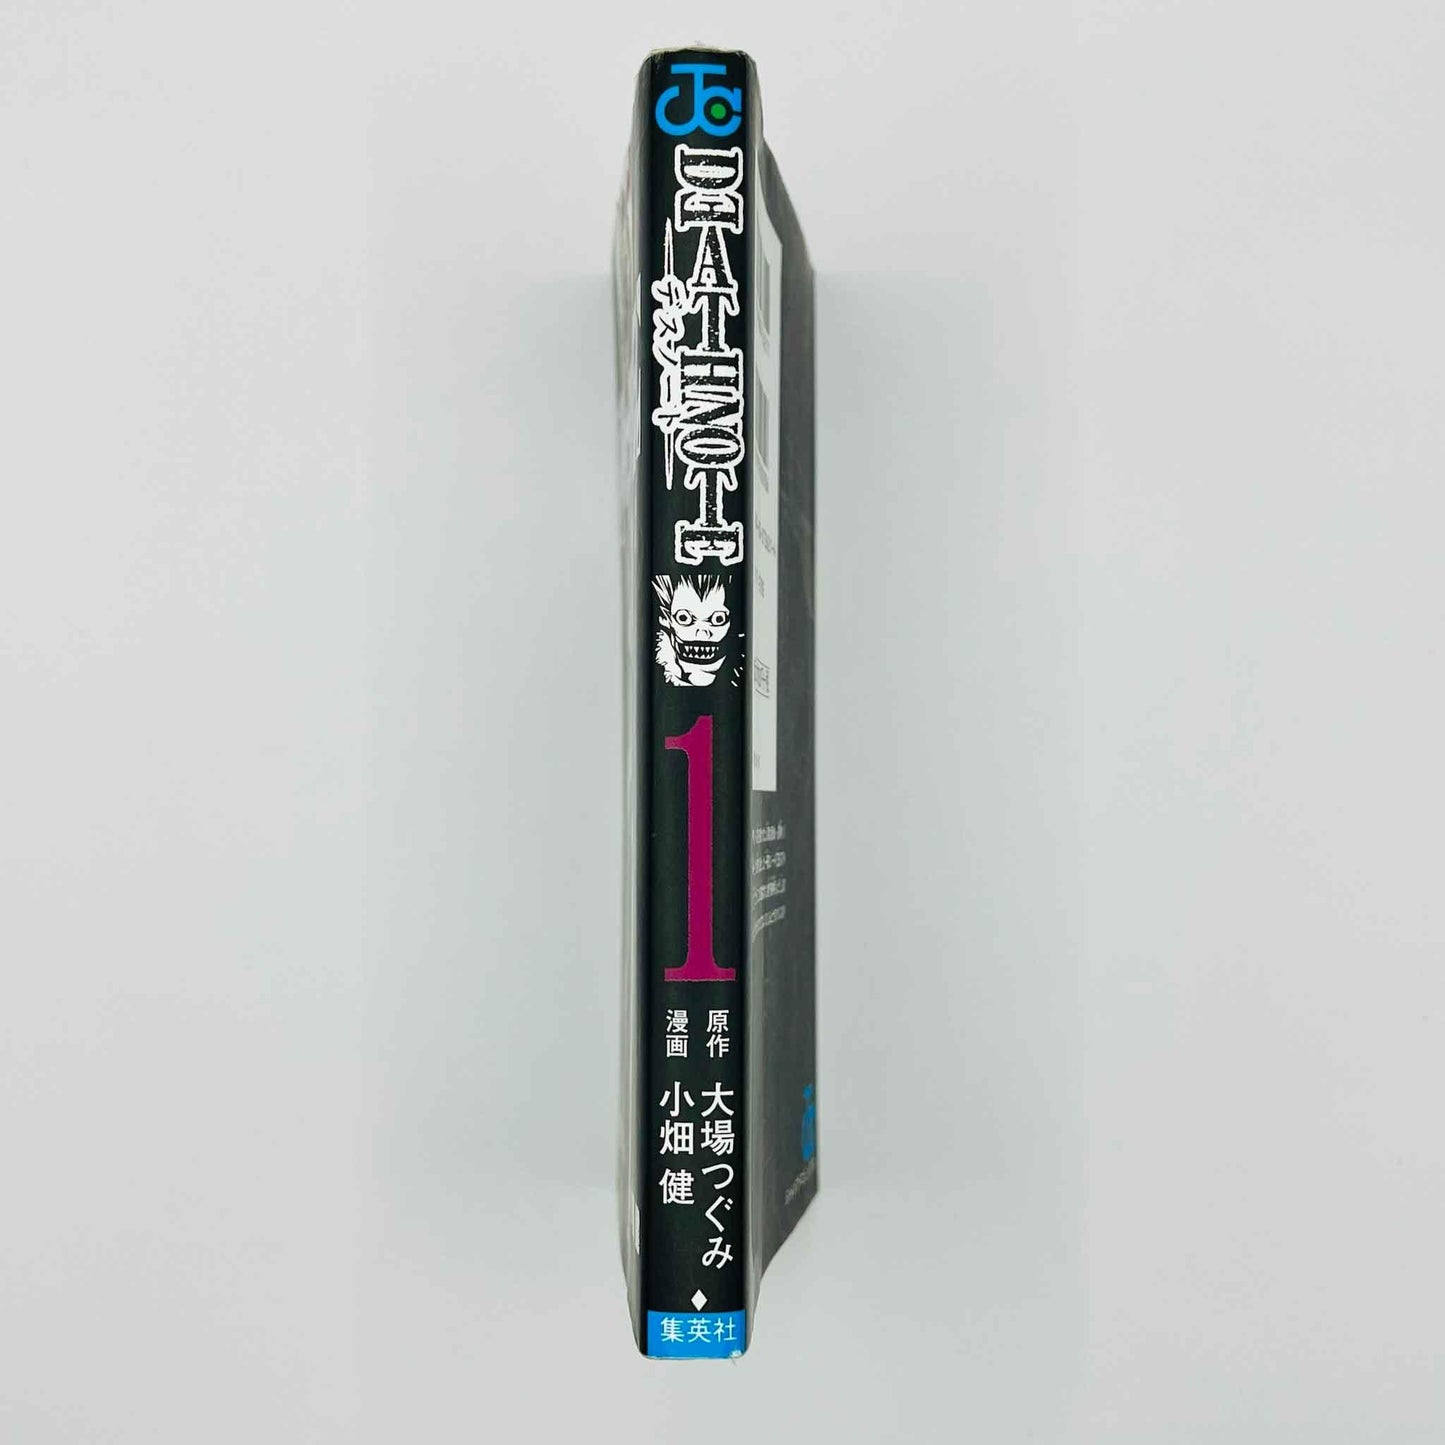 Death Note - Volume 01 - 1stPrint.net - 1st First Print Edition Manga Store - M-DN-01-001